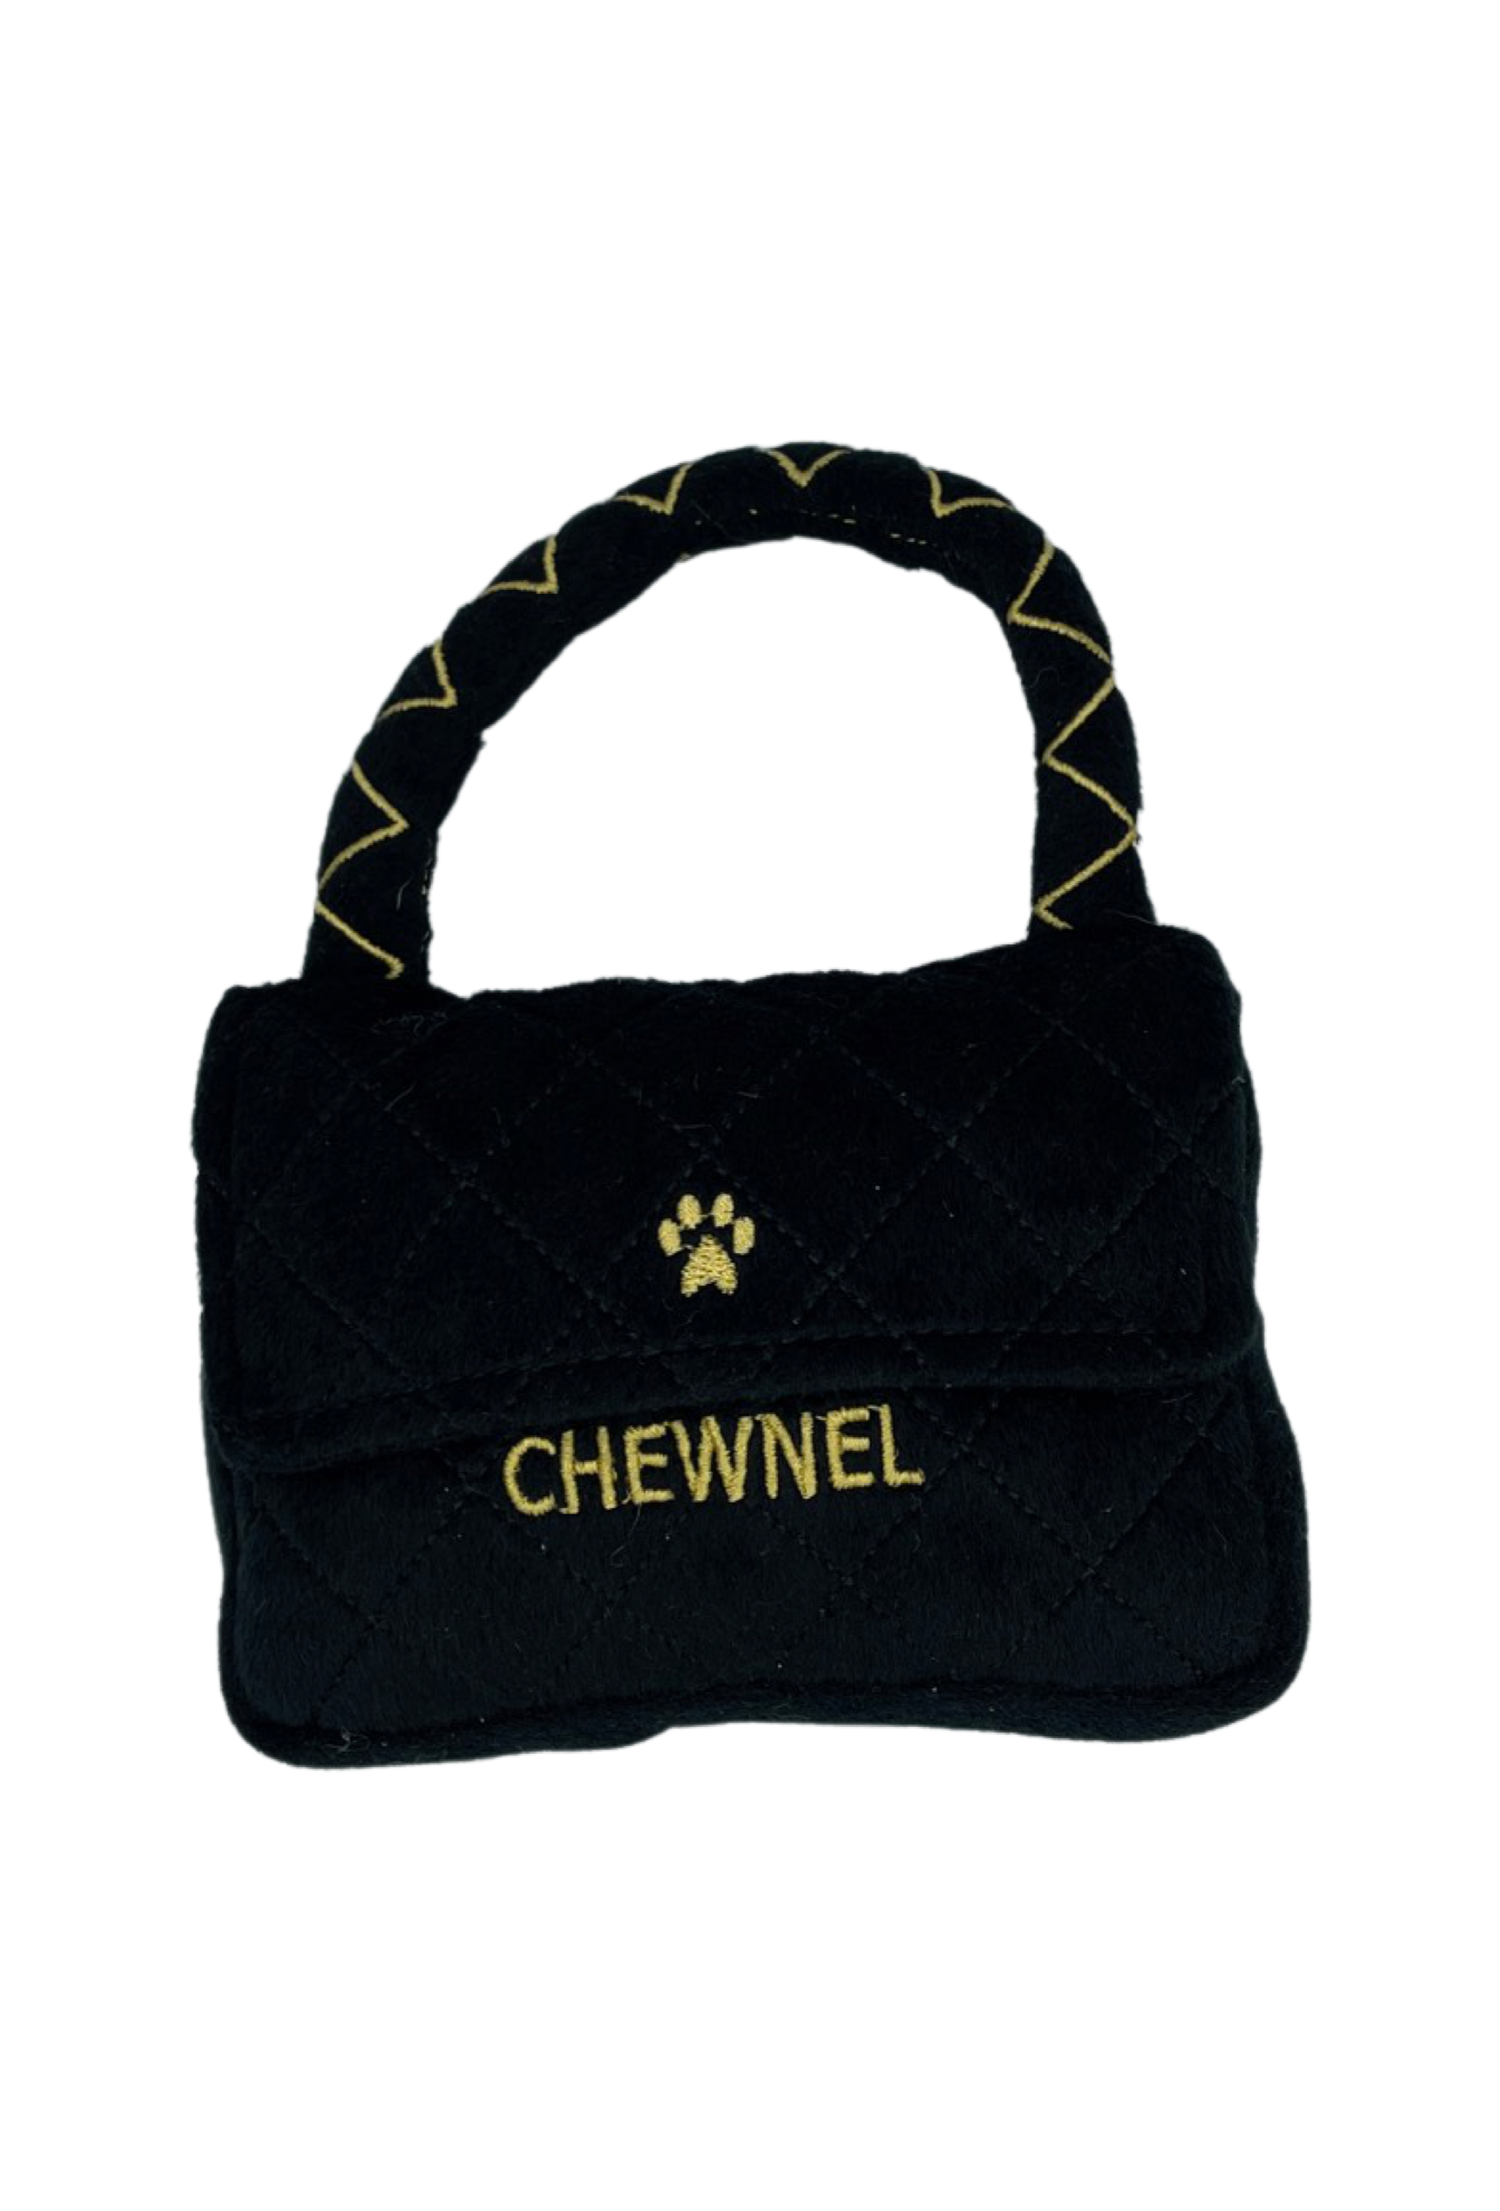 Chewnel pocket black dog toy